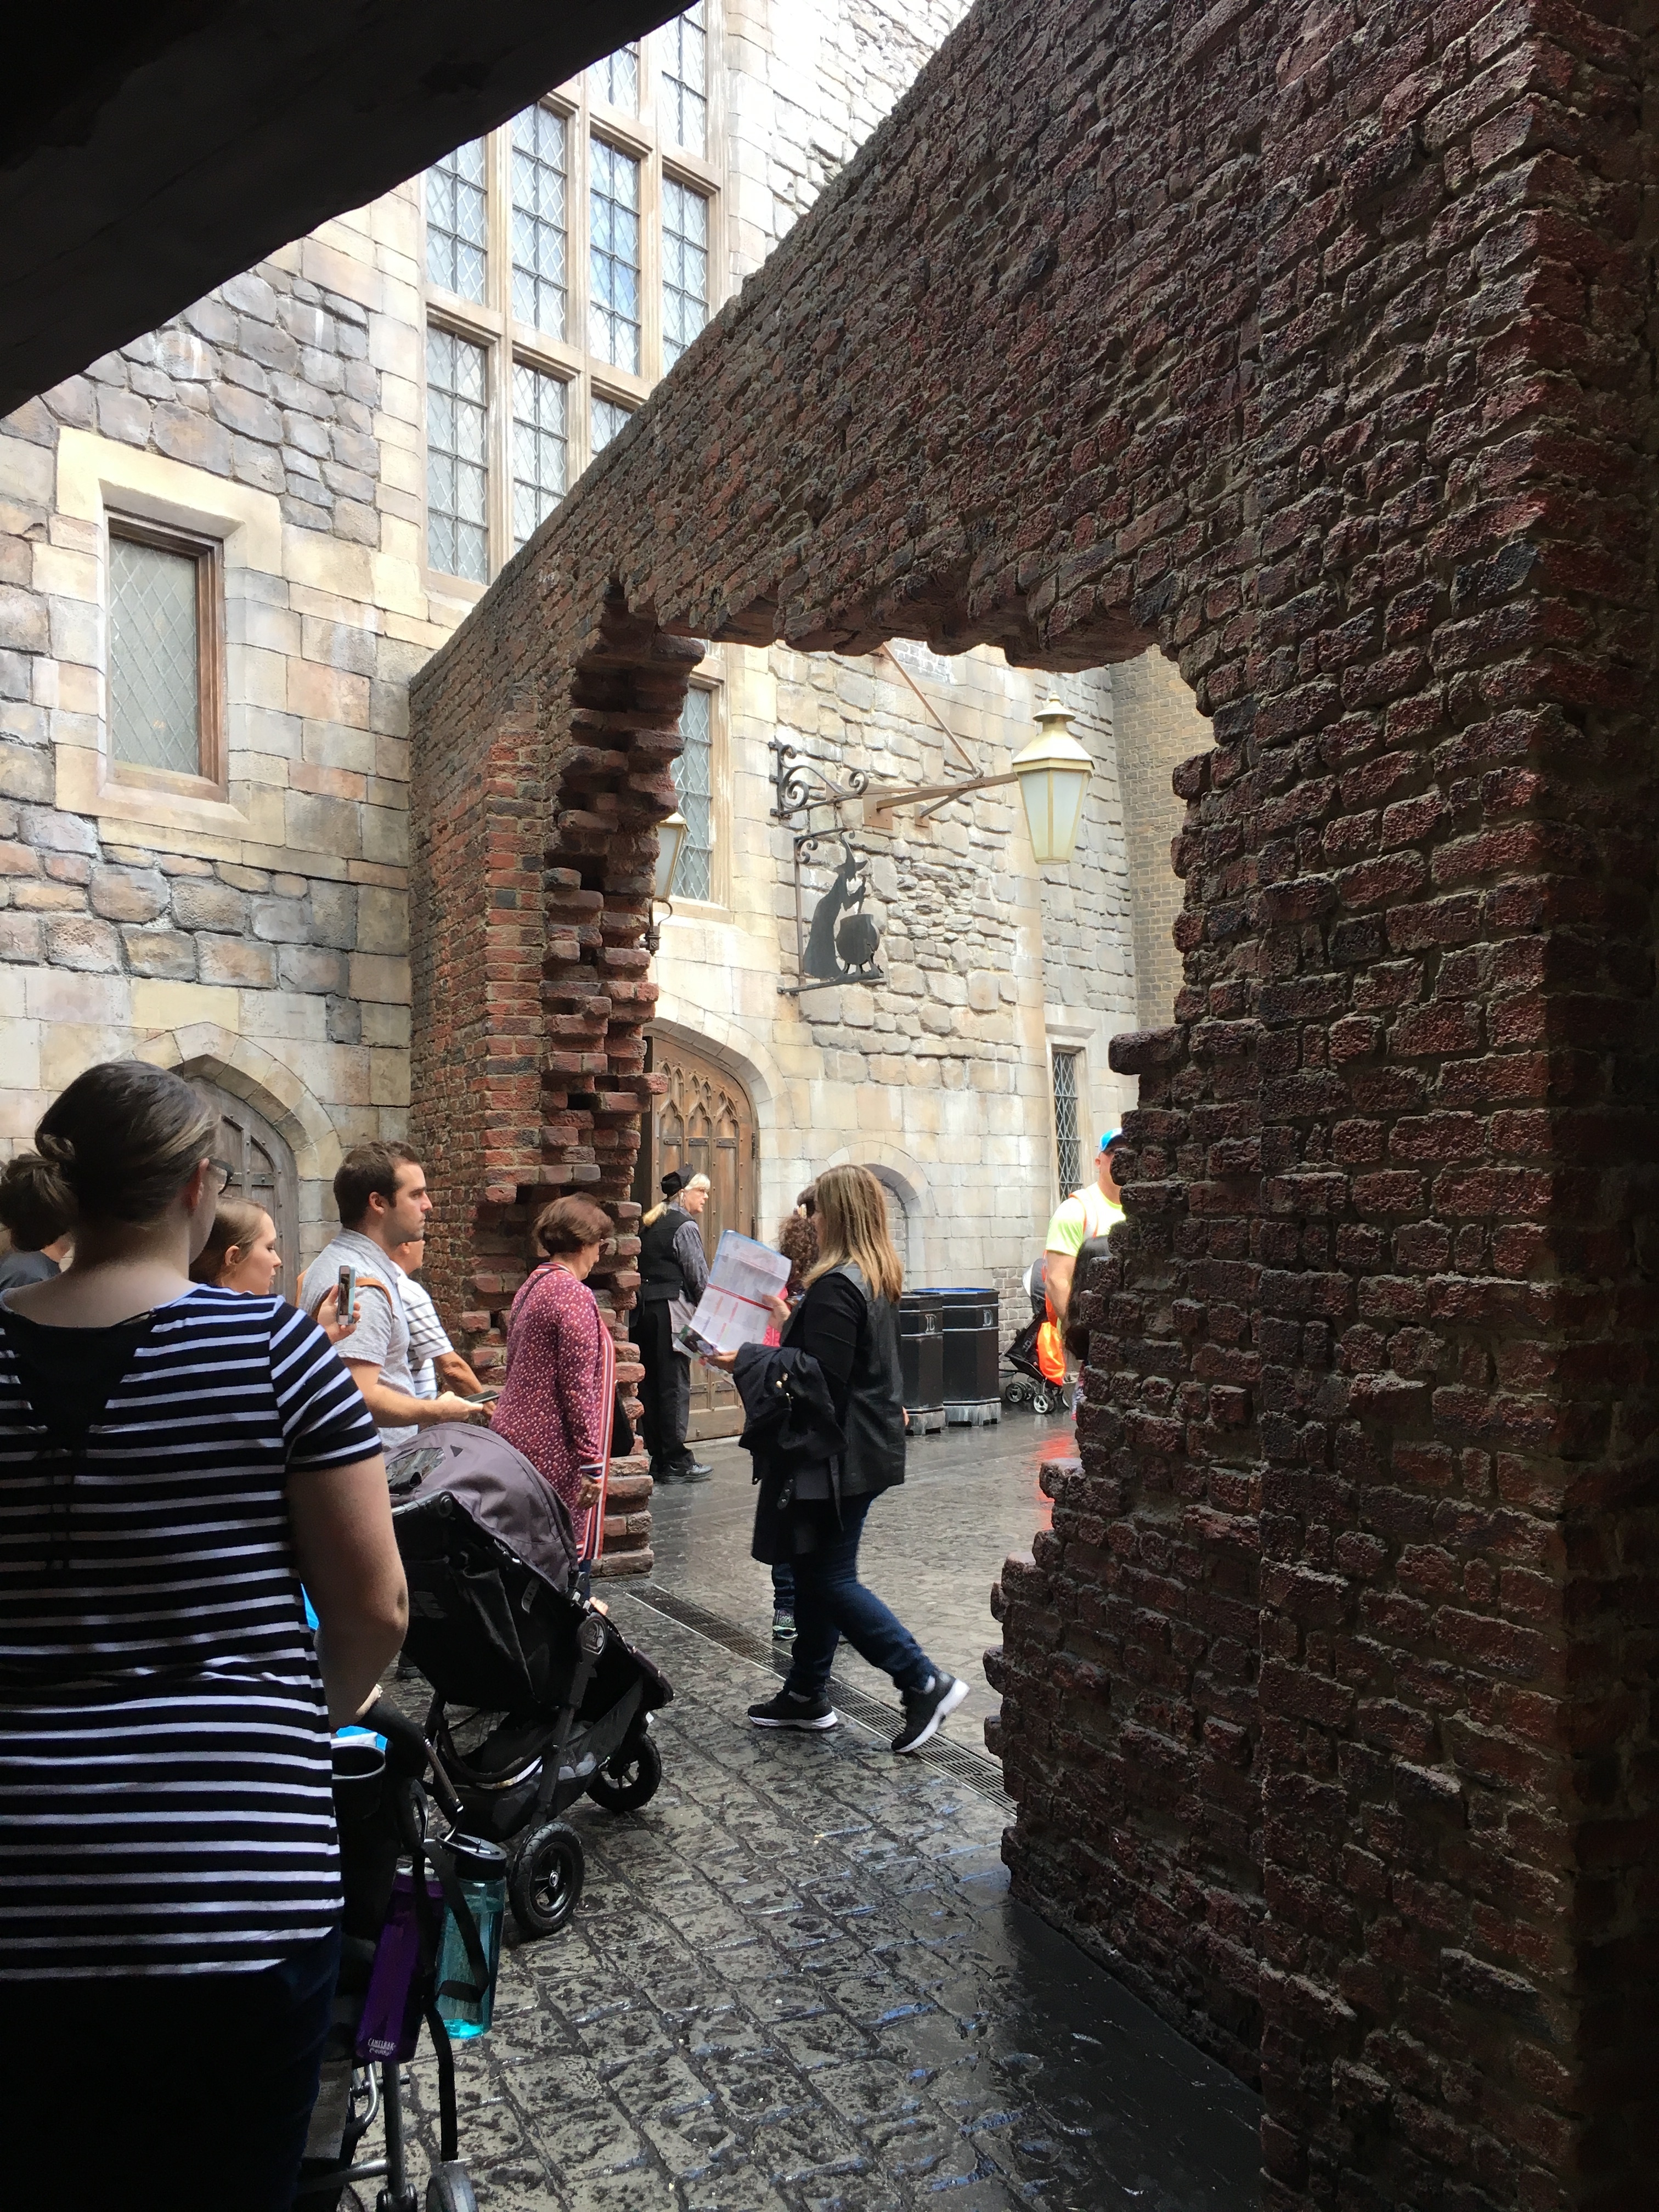 The brick wall entrance to Diagon Alley